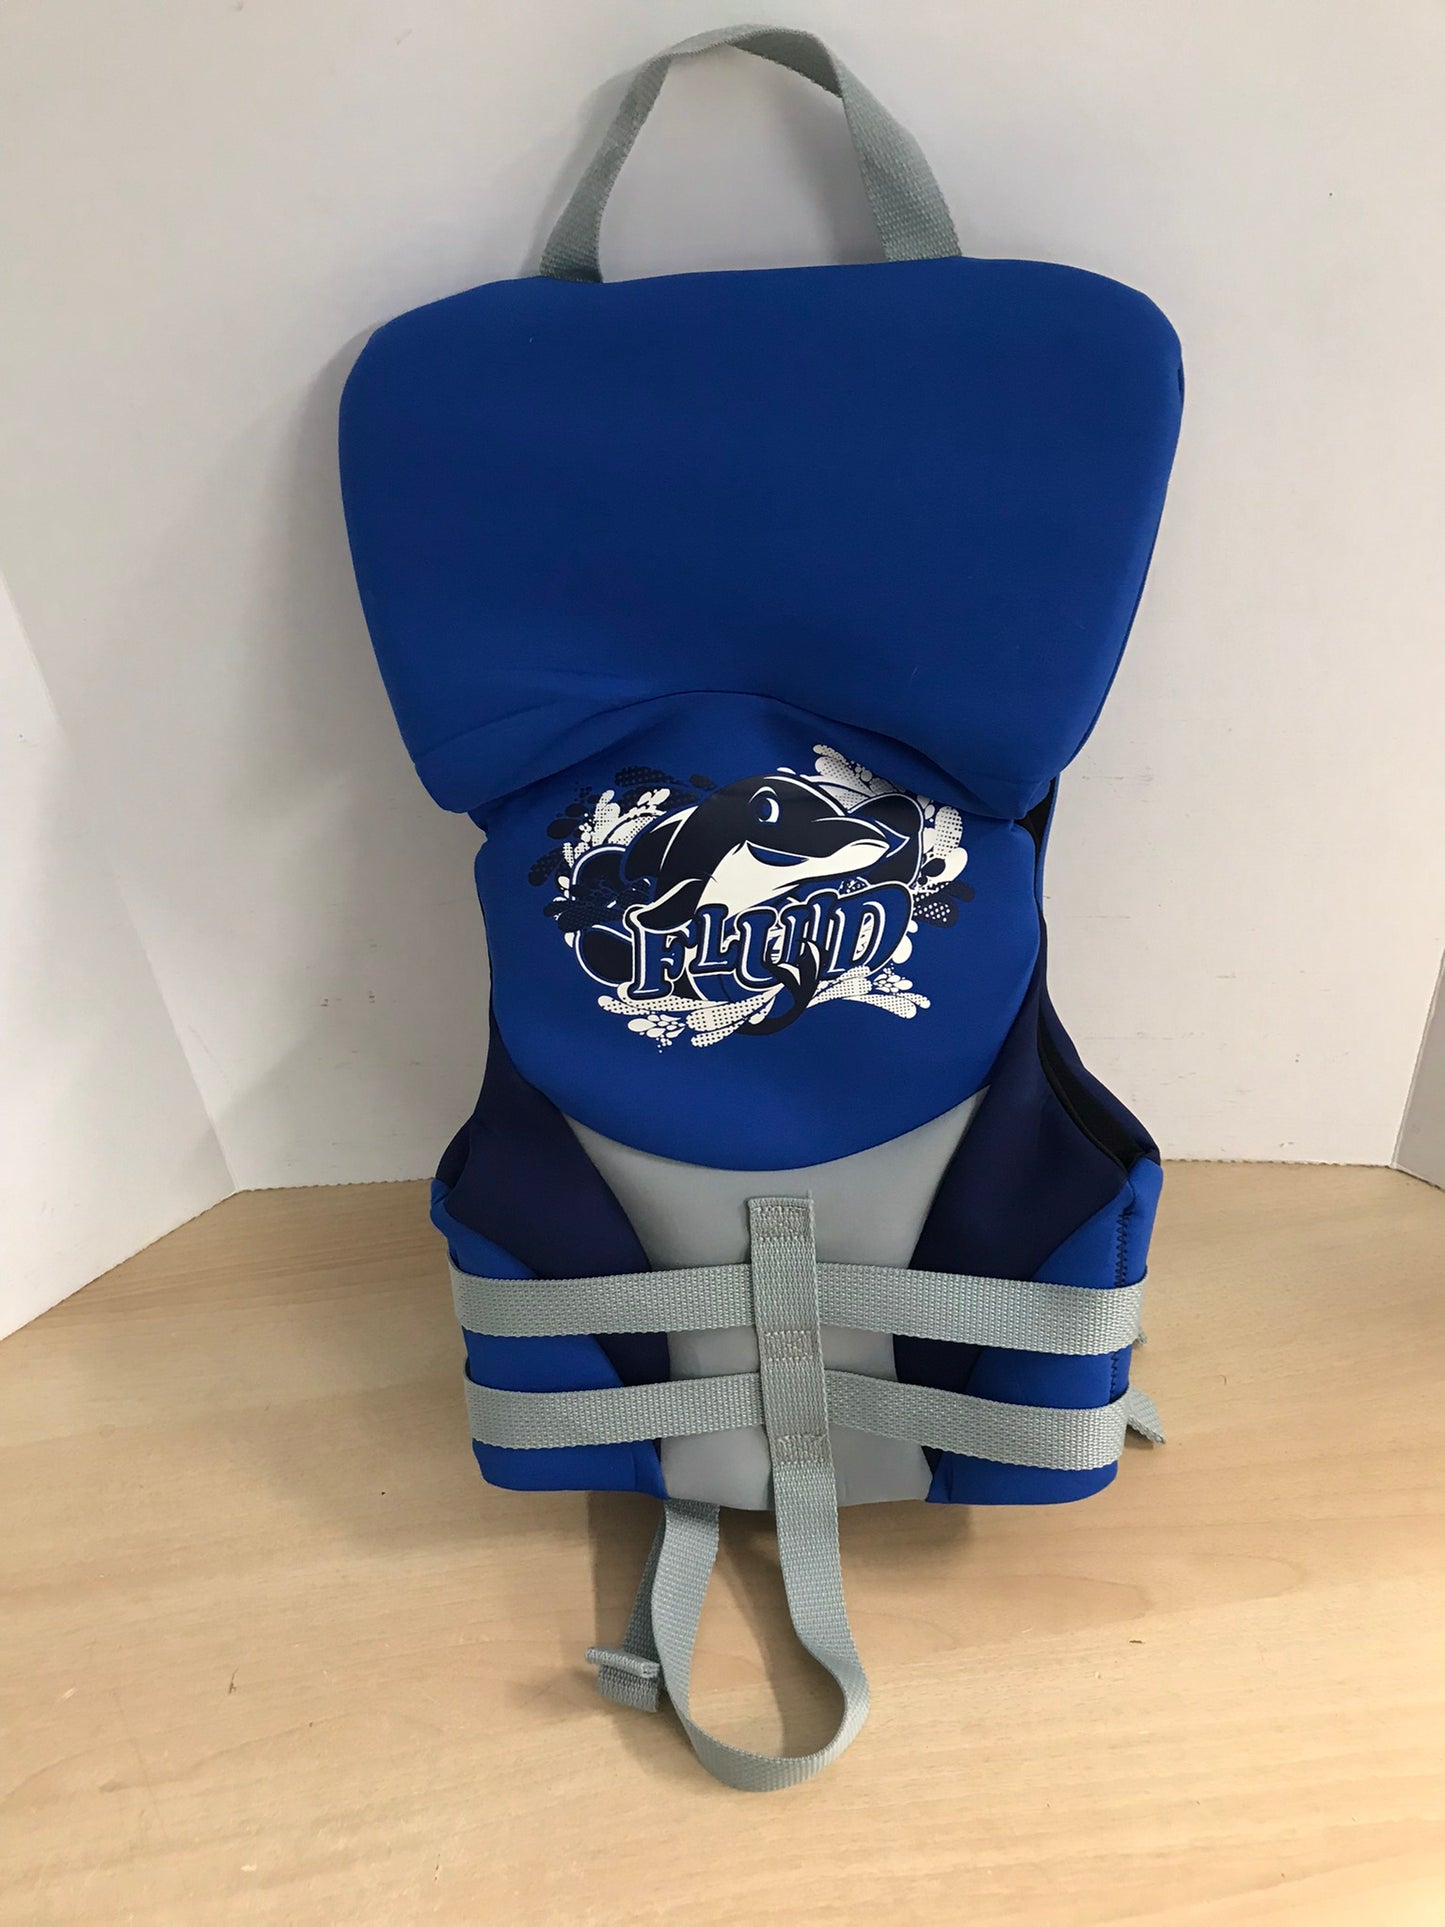 Life Jacket Child Size 30-60 Lb Fluid Neorpene Blue Grey New Demo Model